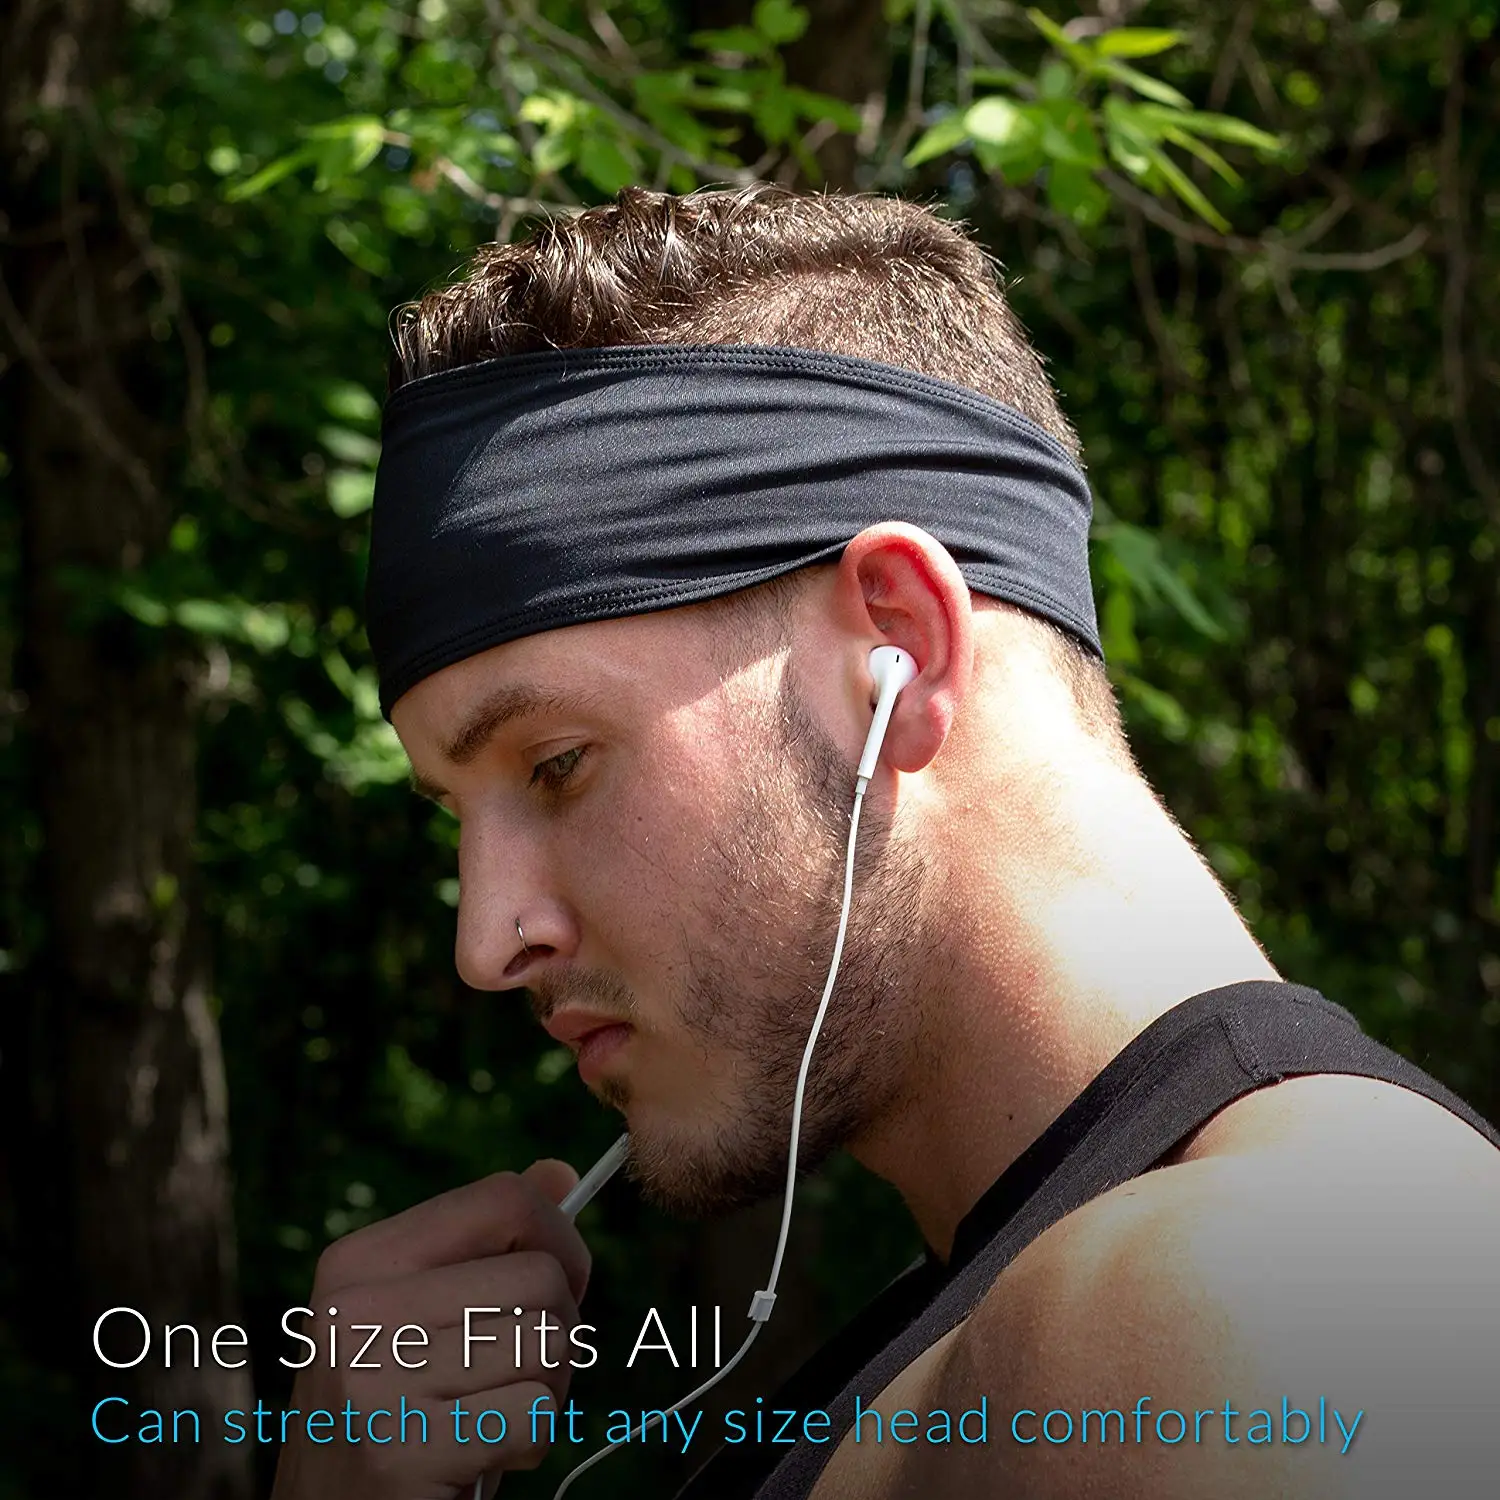 Unisex Cotton Elastic Headband Sweatband Gym Tennis Sports Yoga Running N7 